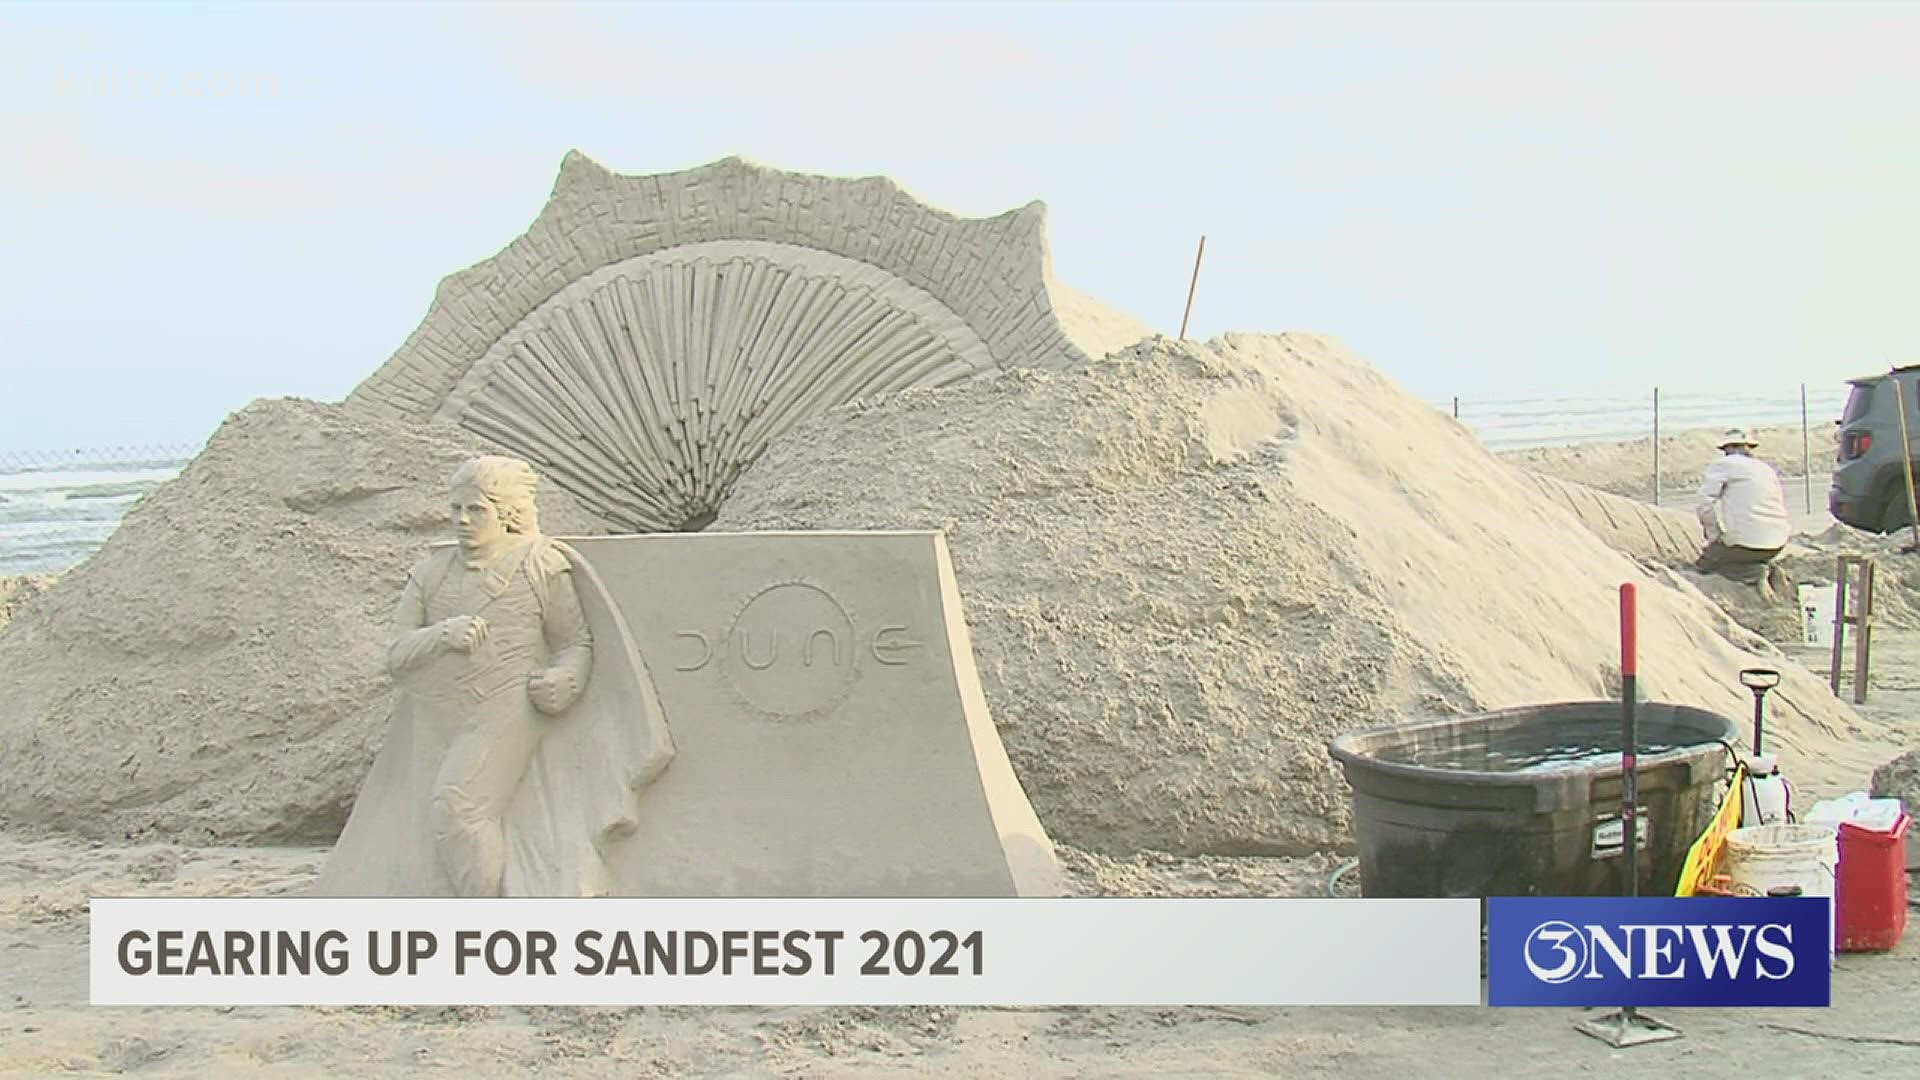 Artist creates sculpture for Sandfest to promote new Dune movie